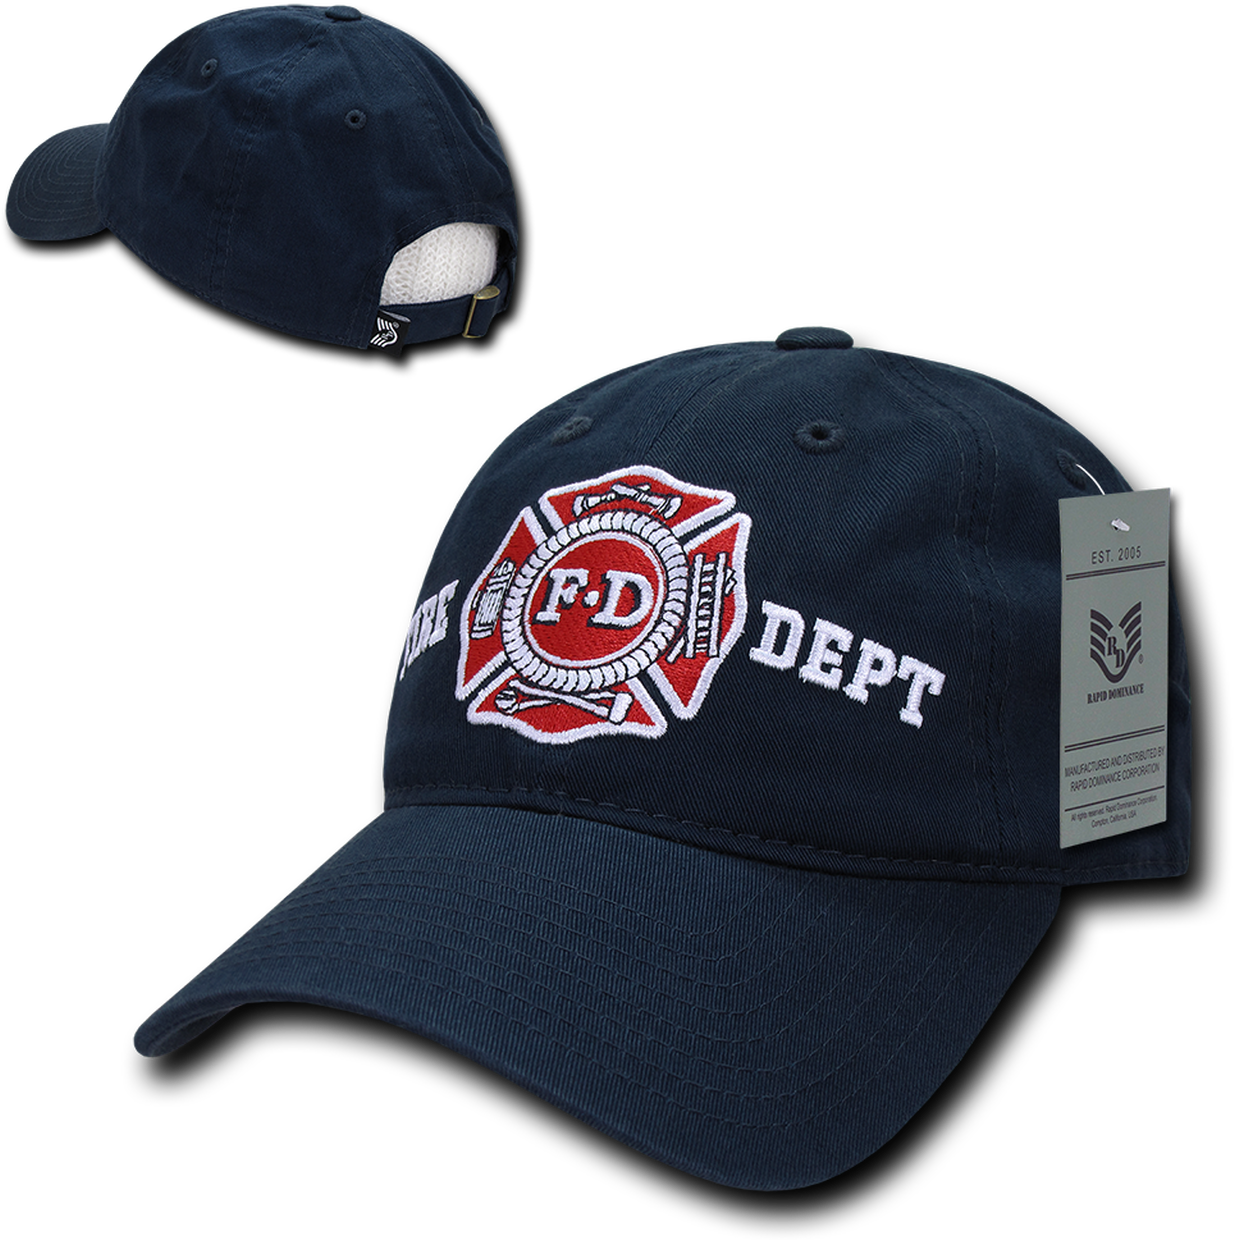 Fire Department Baseball Cap PNG image